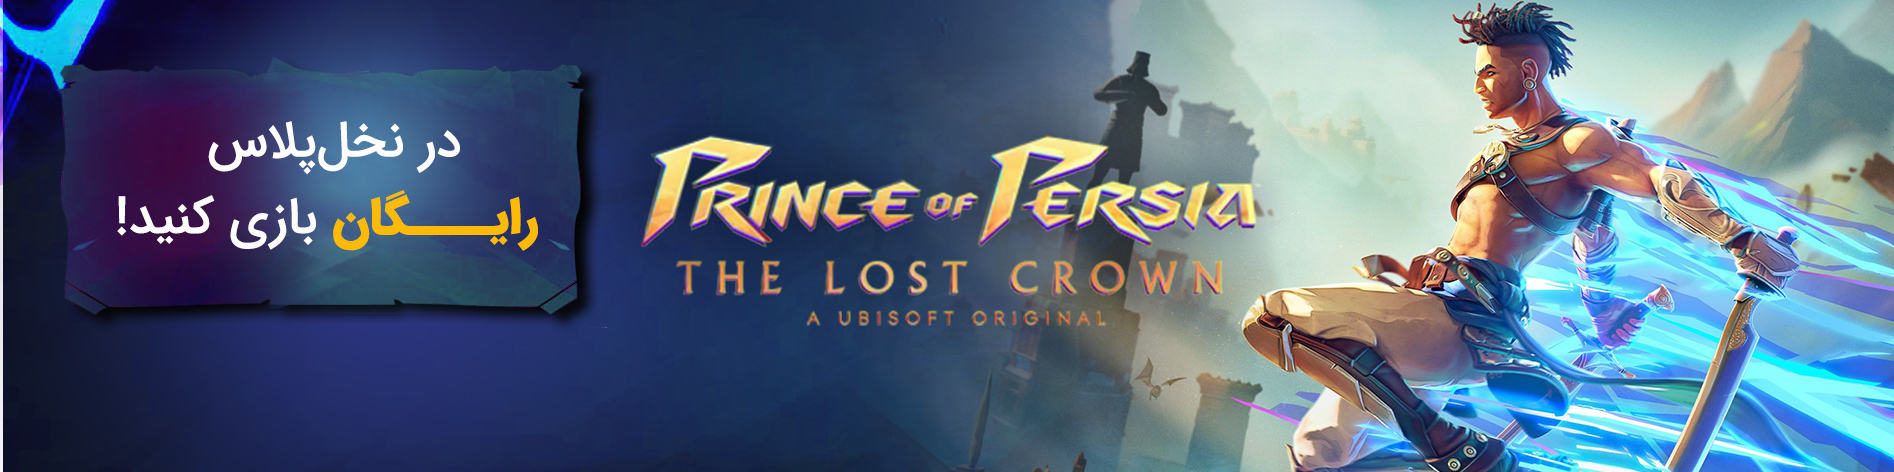 Prince of persia2 1